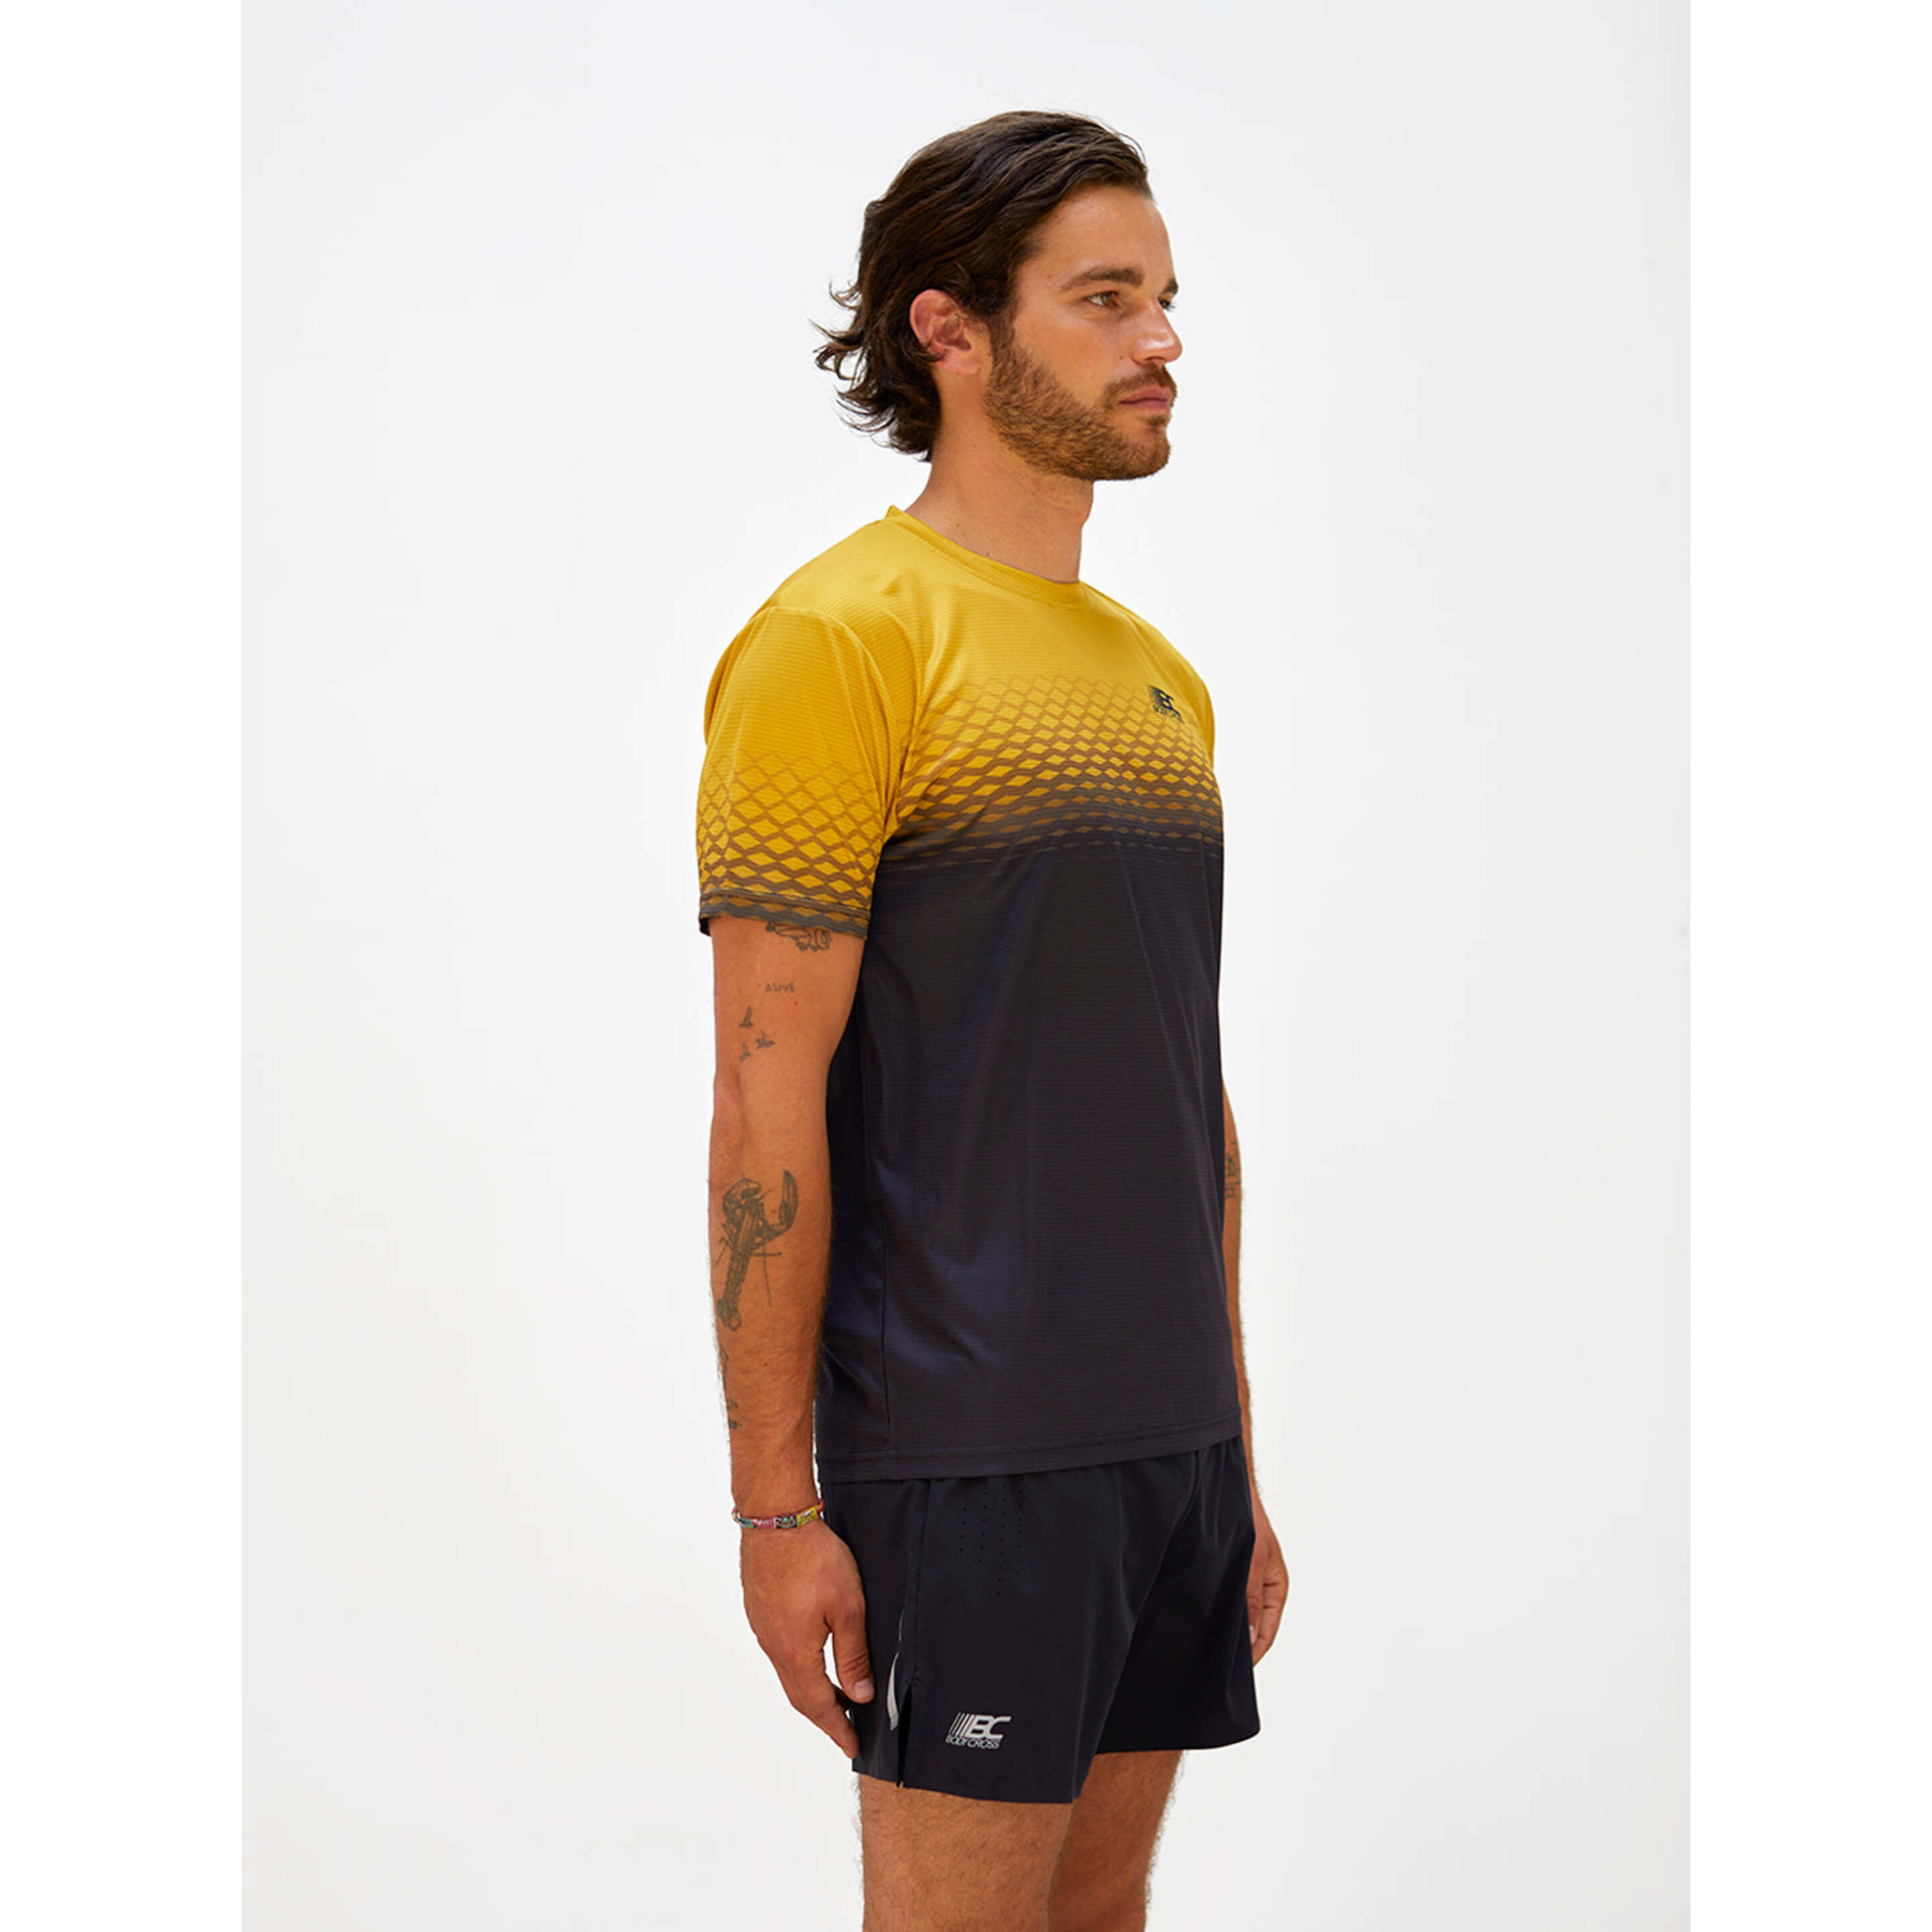 Camiseta Running Bodycross Djoe - Amarillo - Djoe-gold/black-s  MKP